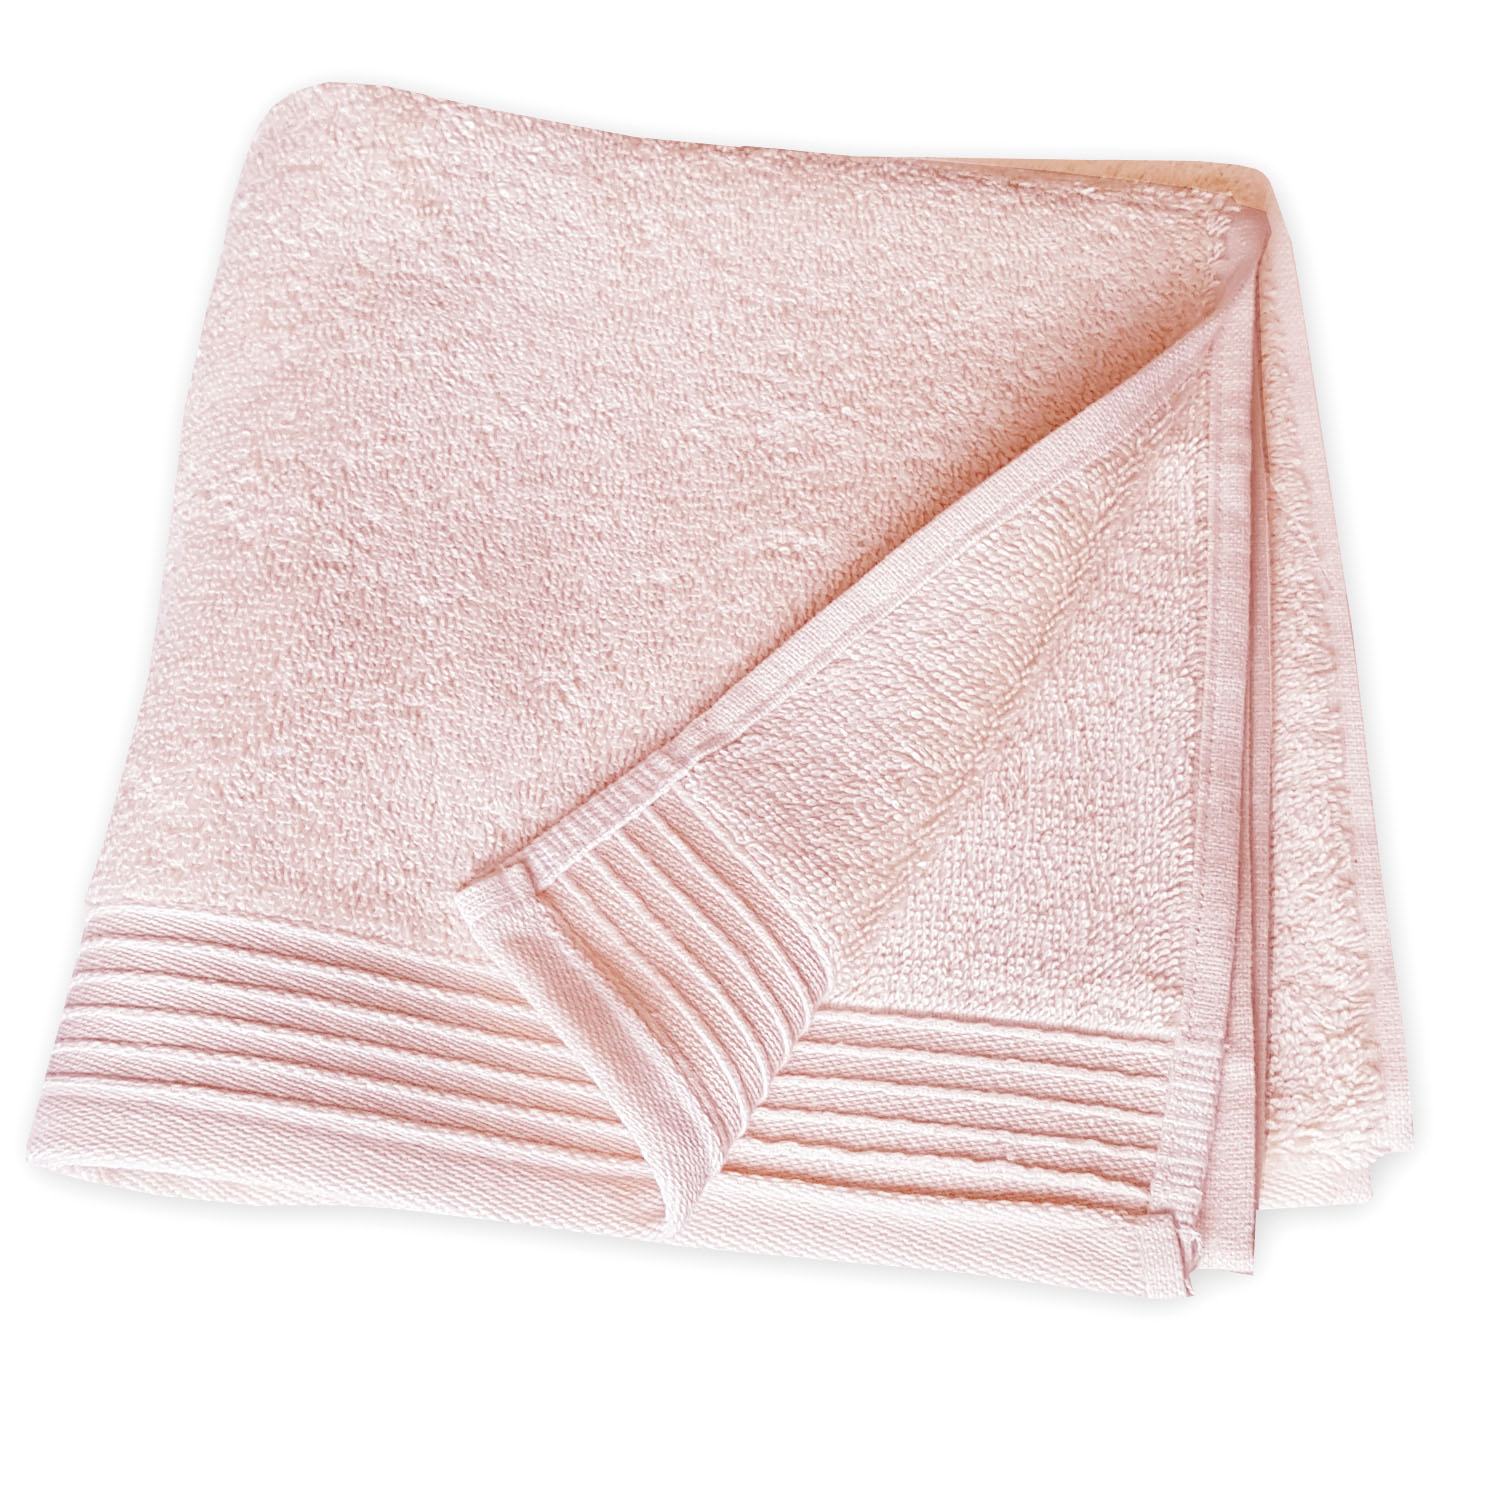 edlem Framsohn Quartz- und Badetücher mit Glanz- Premium Rose Flauschige Handtücher